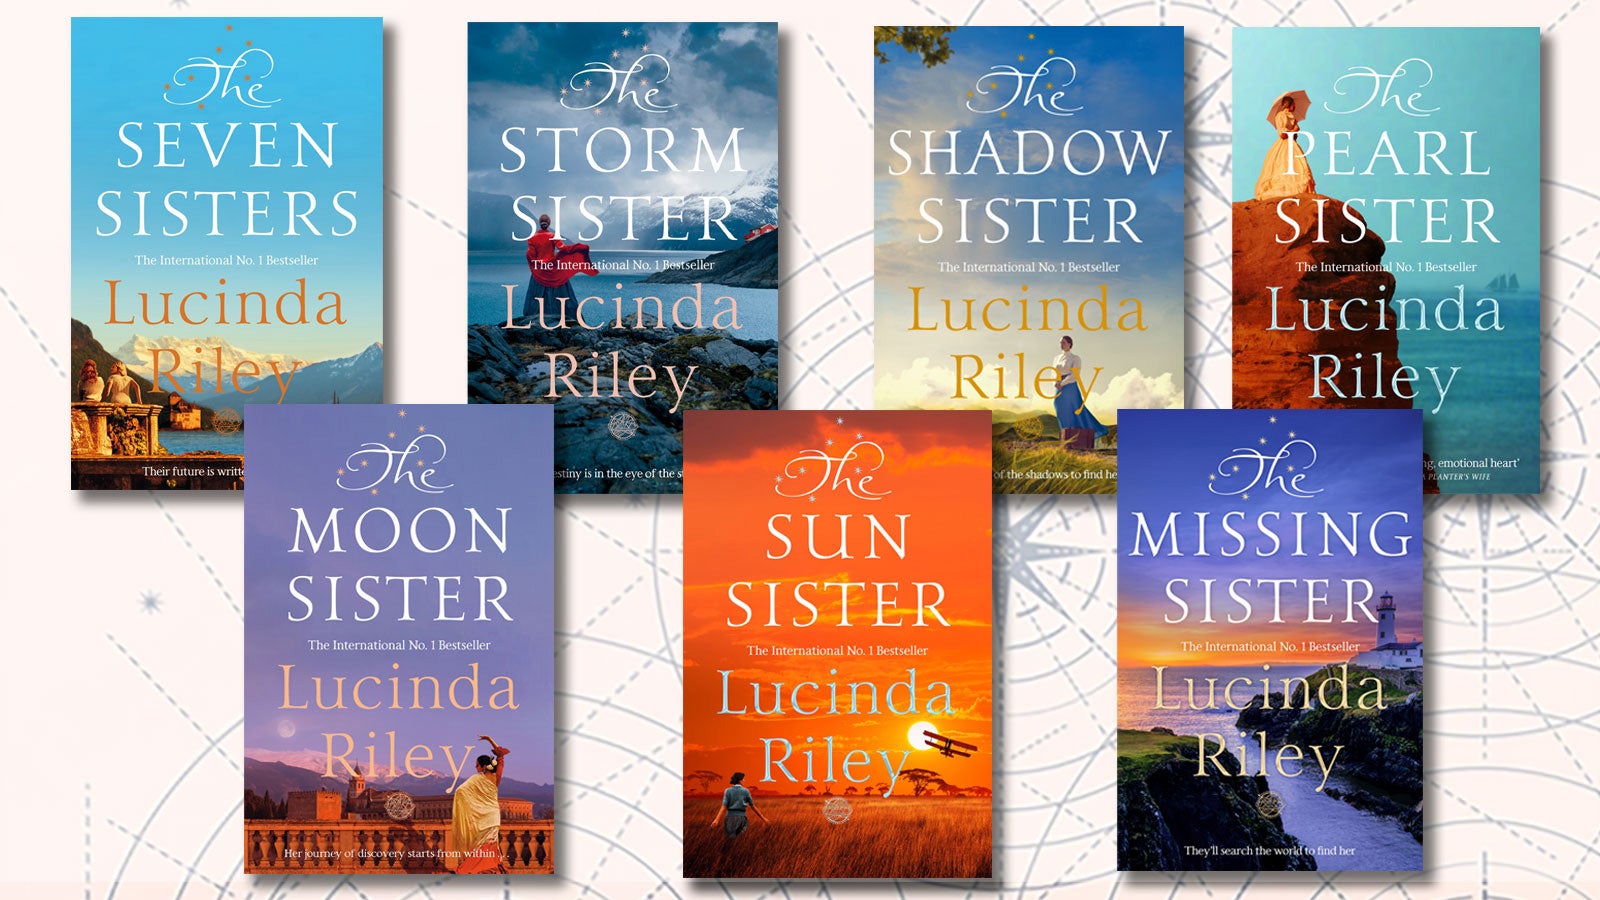 7 sisters book. Люсинда Райли все книги. Райли 7 сестер. Люсинда Райли 7 сестер. Люсинда Райли семь сестер все книги.